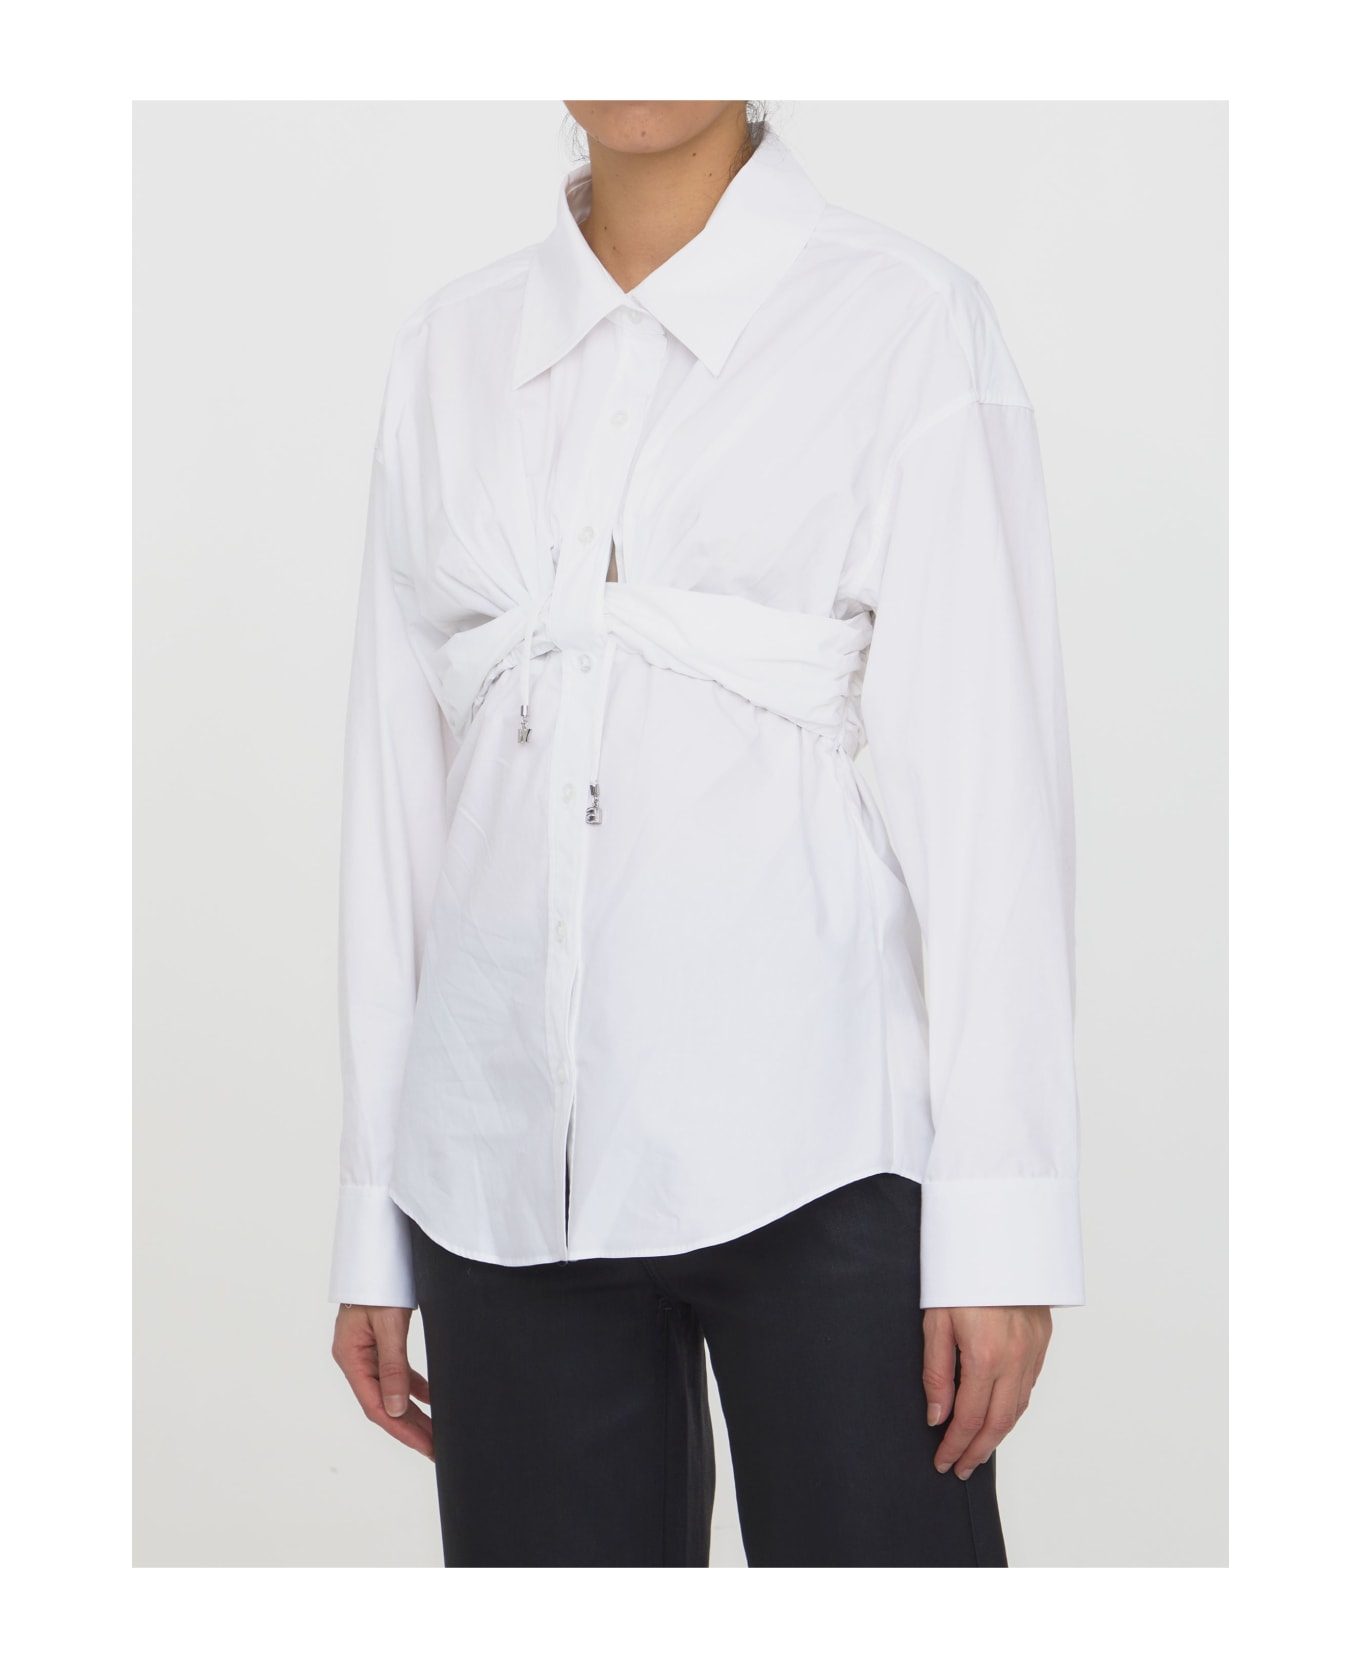 Alexander Wang Ruched White Shirt - WHITE